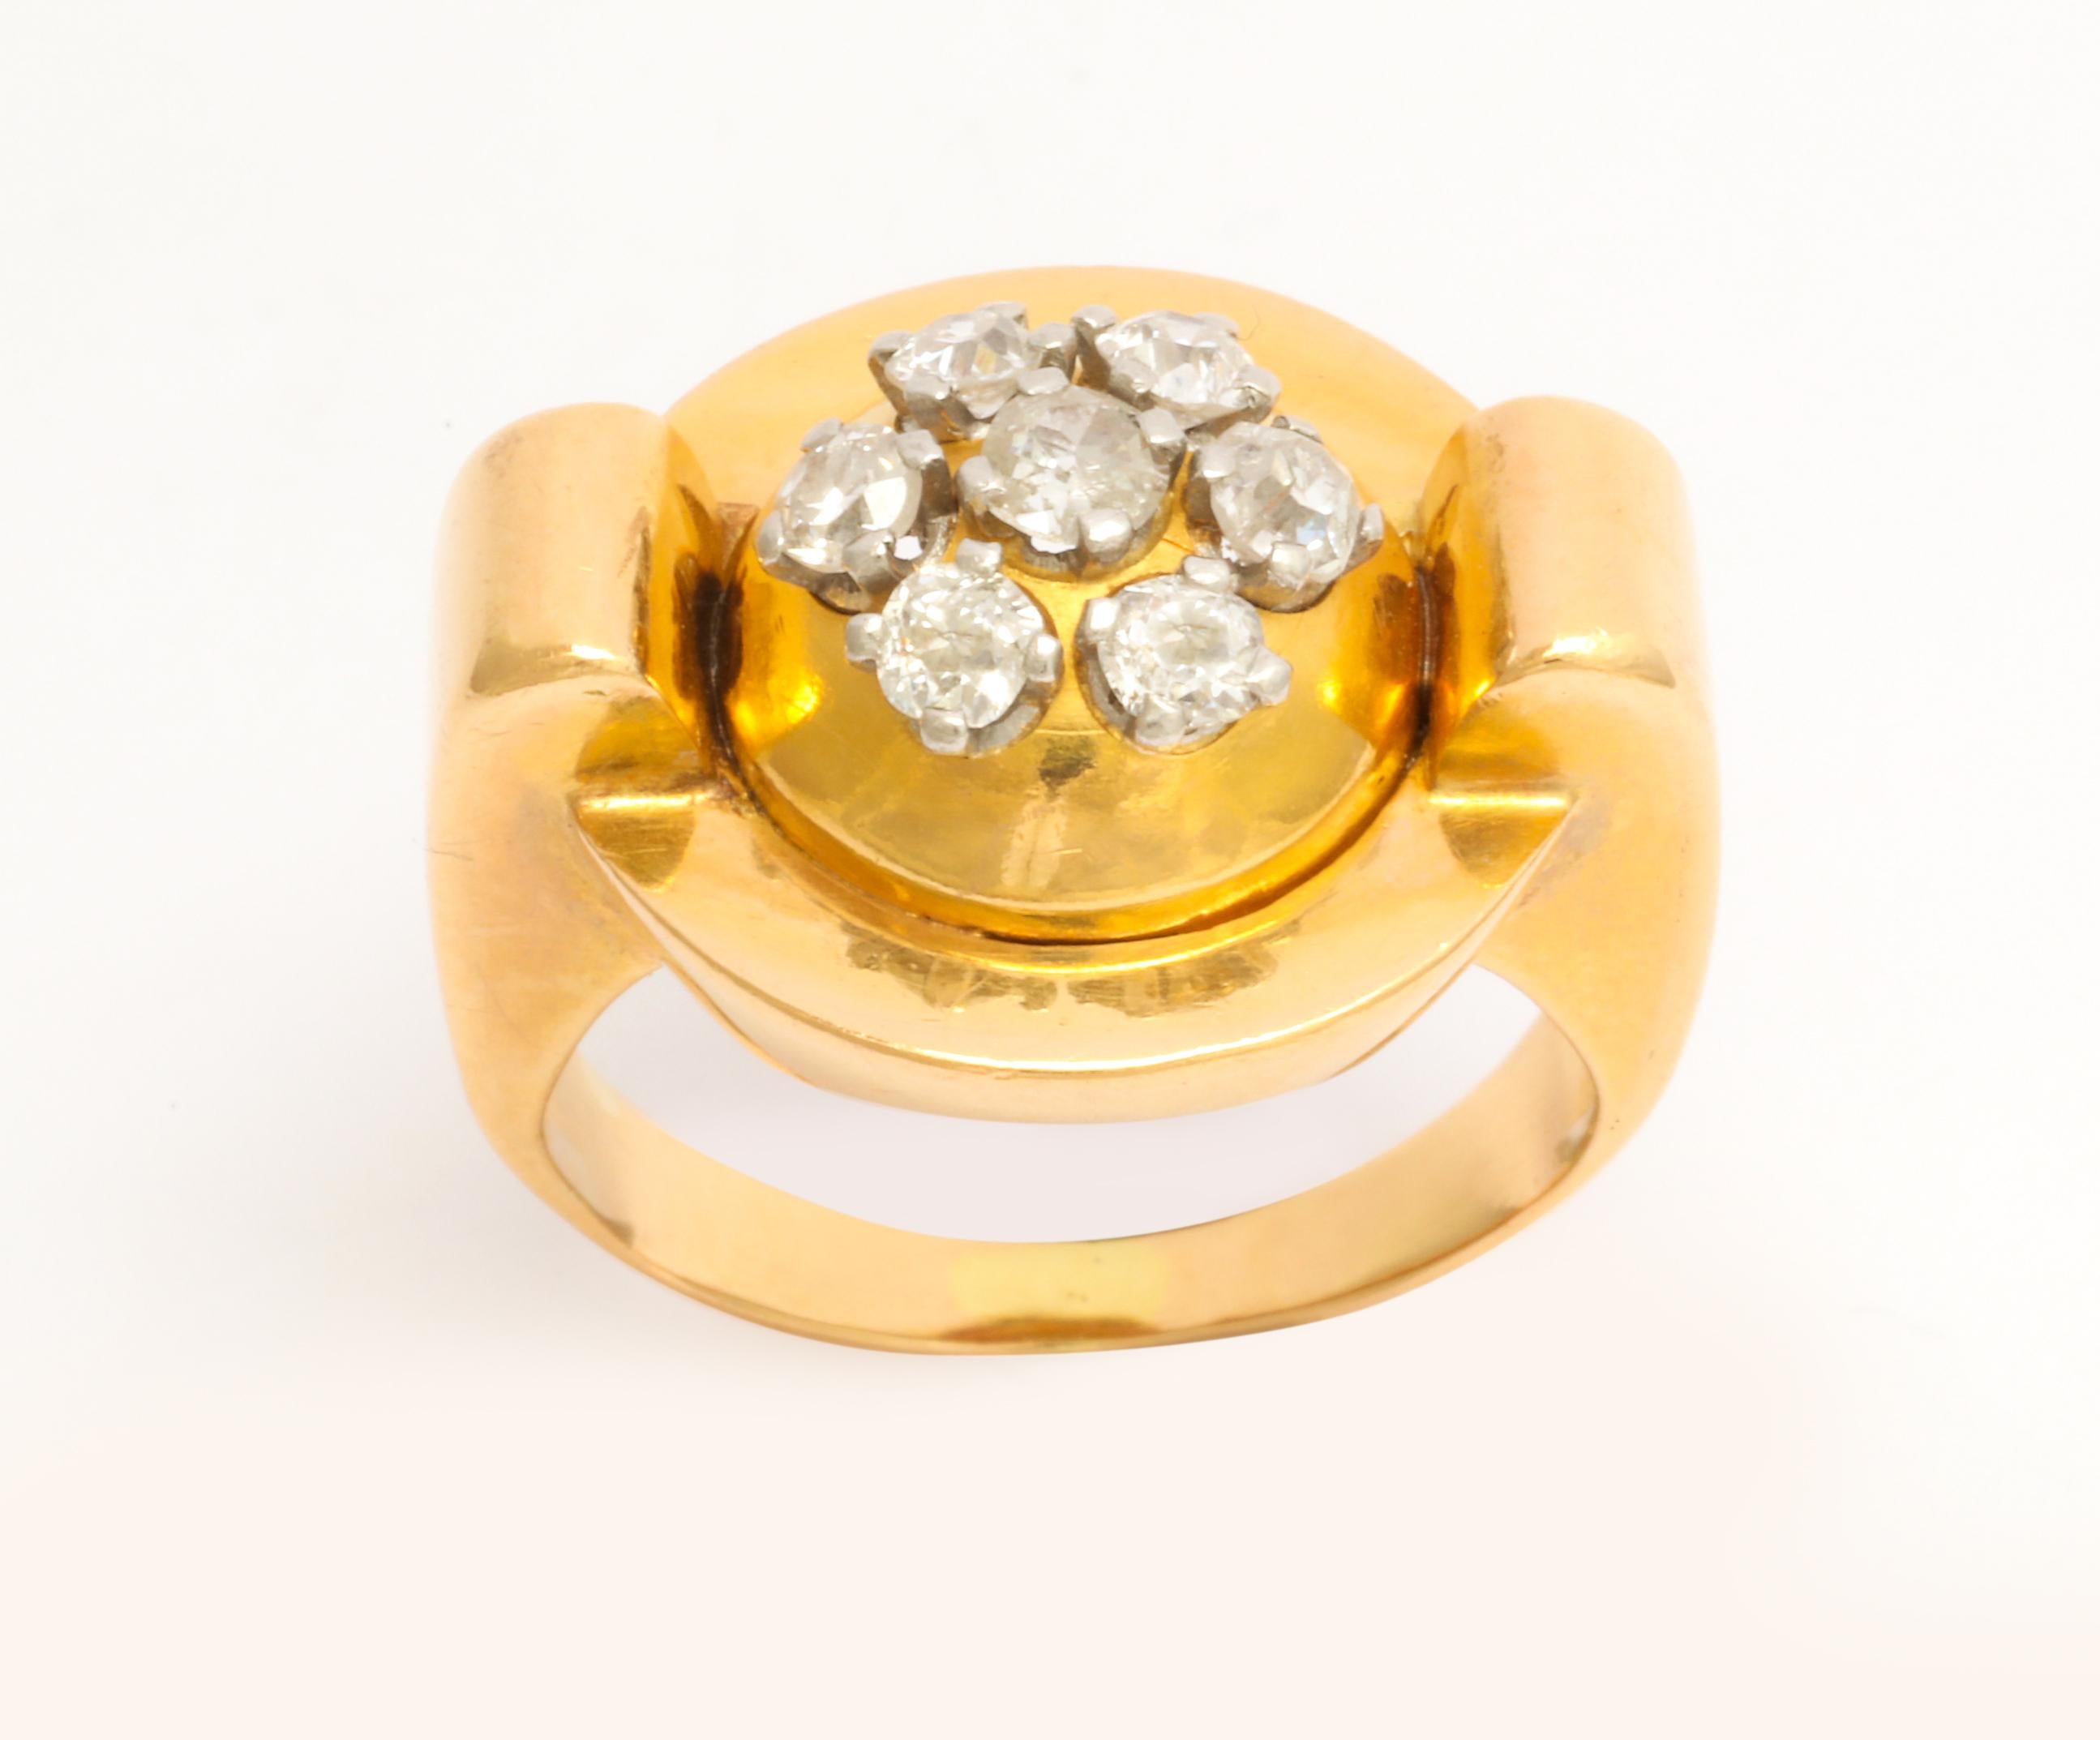 Vintage French 18k Retro Diamond Ring 2